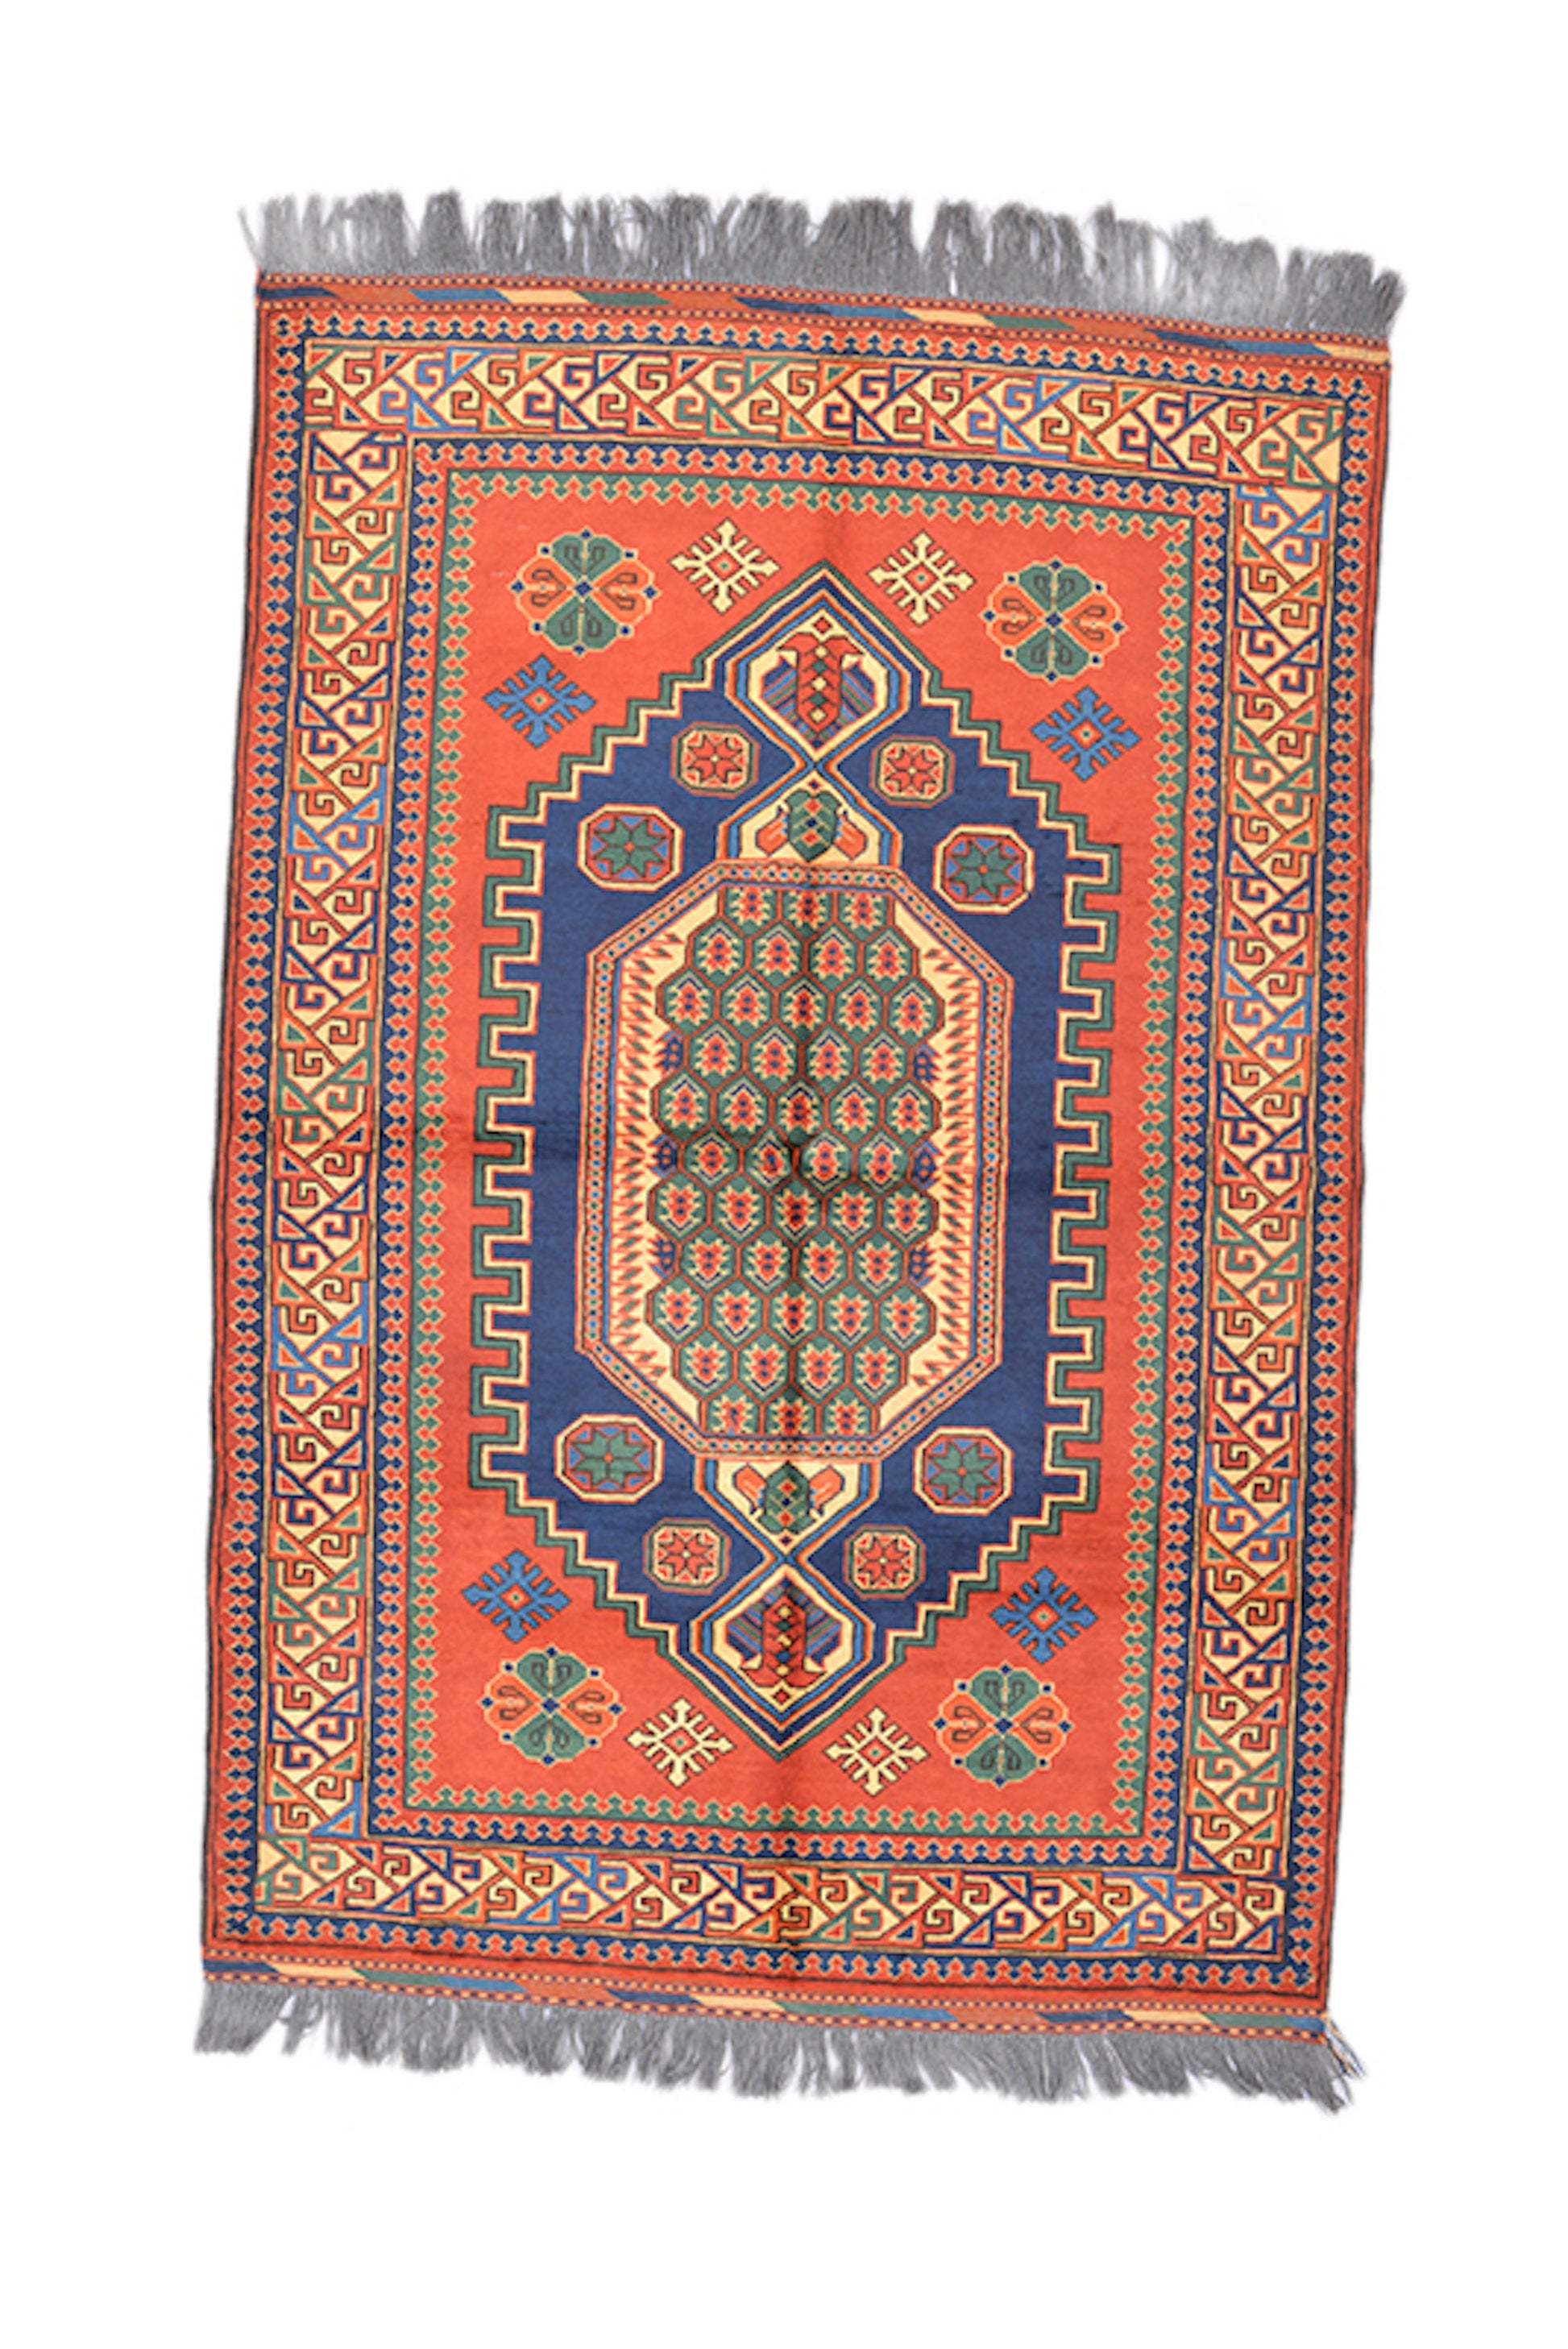 4 x 6 Feet Orange Blue Medallion Rug | Hand Woven Area Rug | Oriental Persian Rug | Living Room Rug | Accent Geometric Pattern Wool Rug